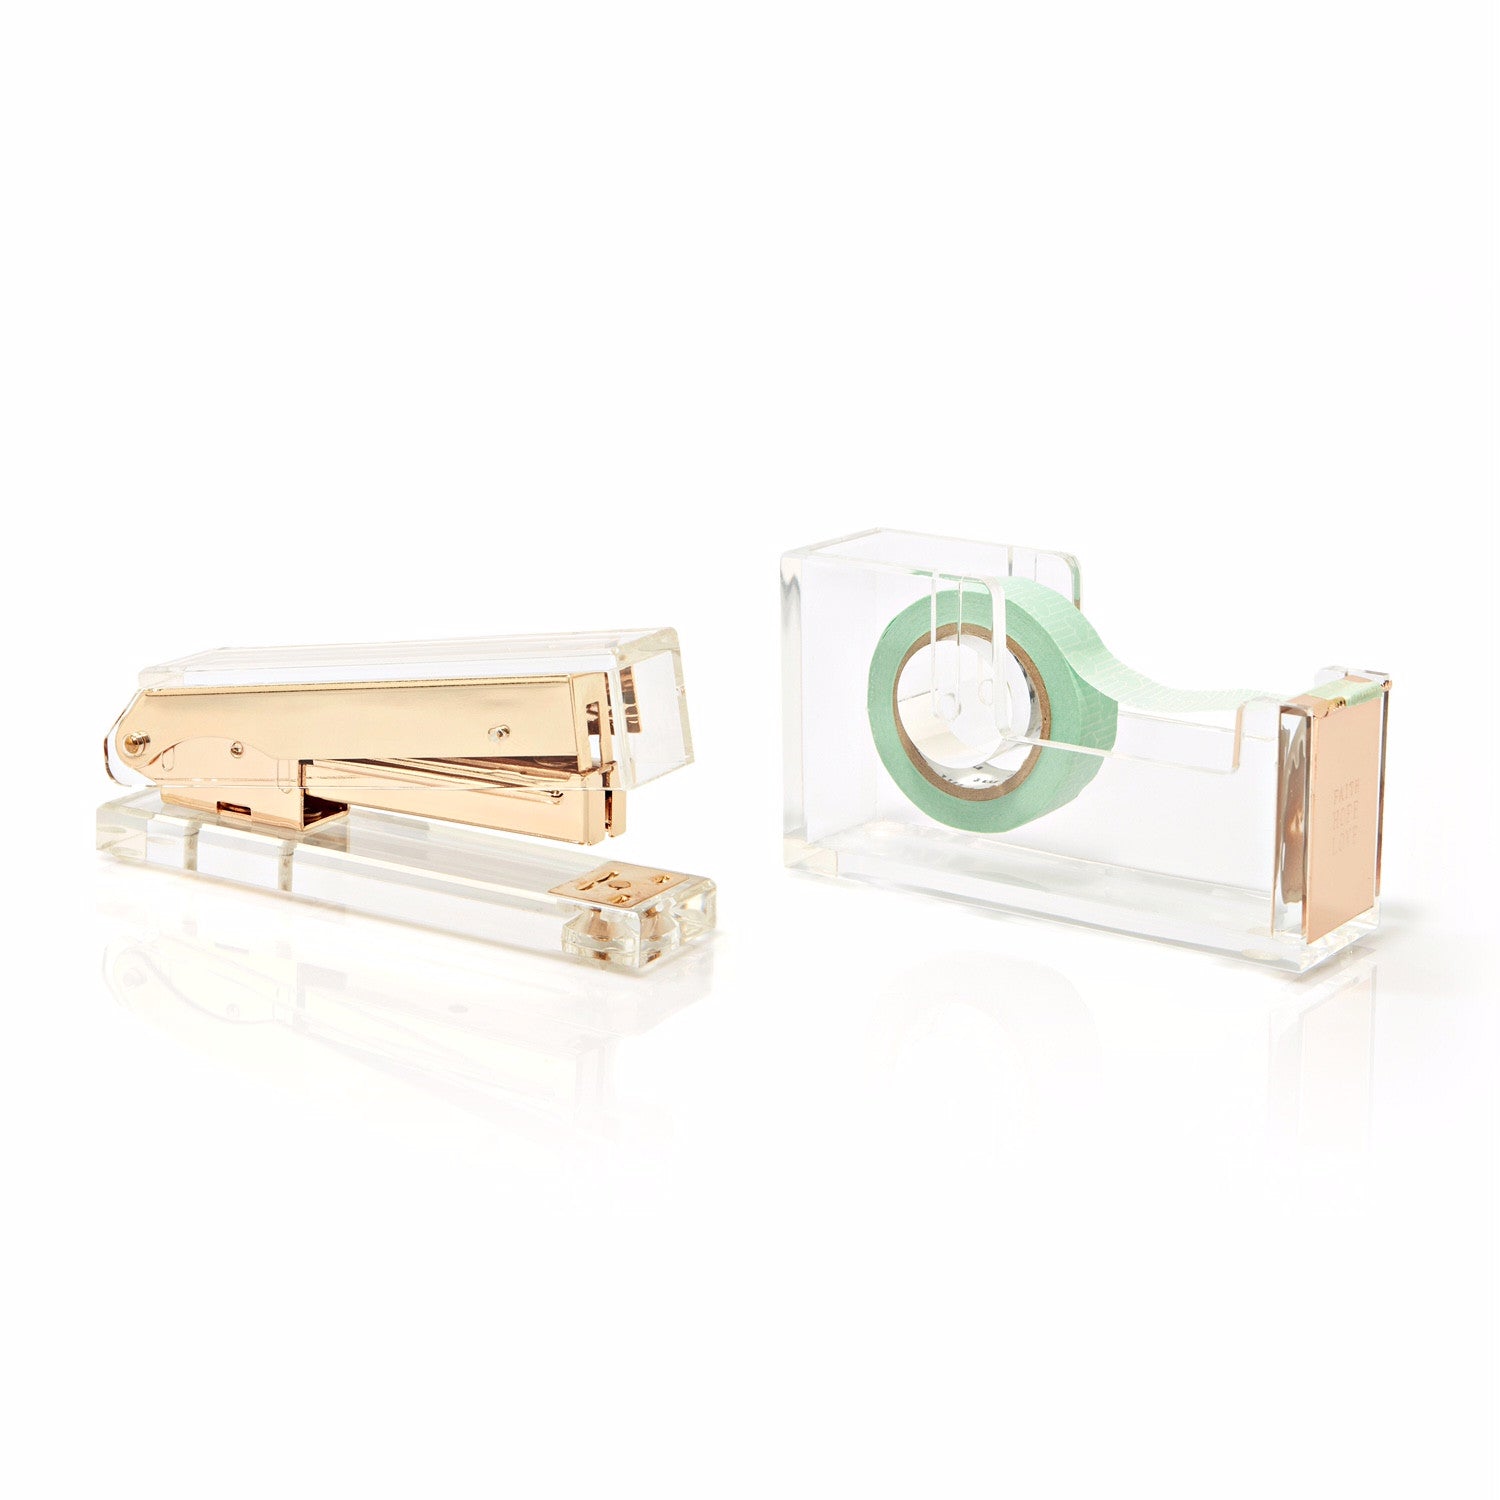 Stapler & Tape dispenser Set - Stitches and Tweed acrylic designer stationery